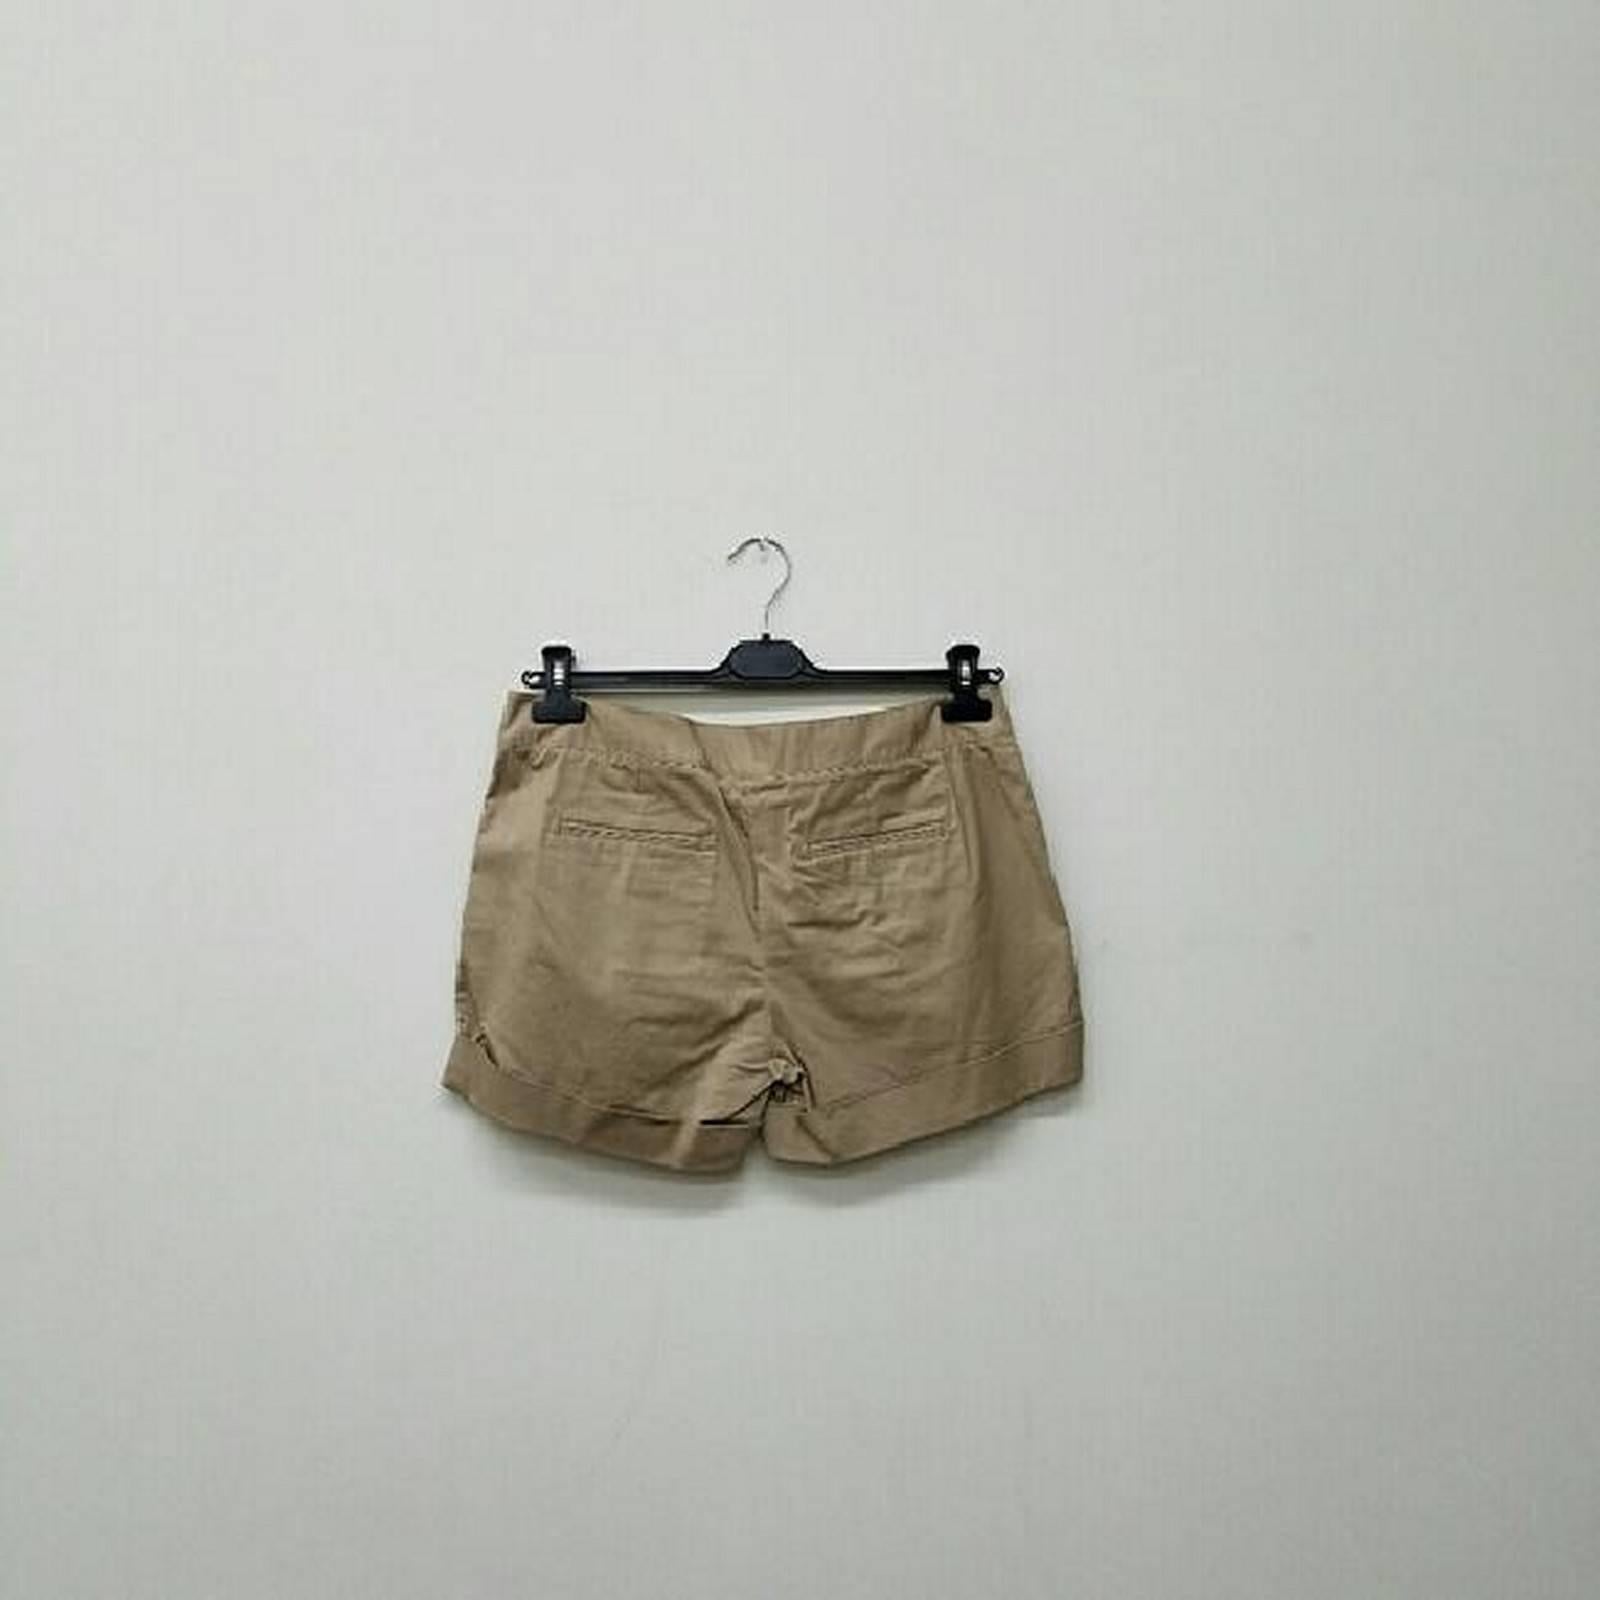 Brown Michael Kors Shorts - Size: 8 (M, 29, 30)